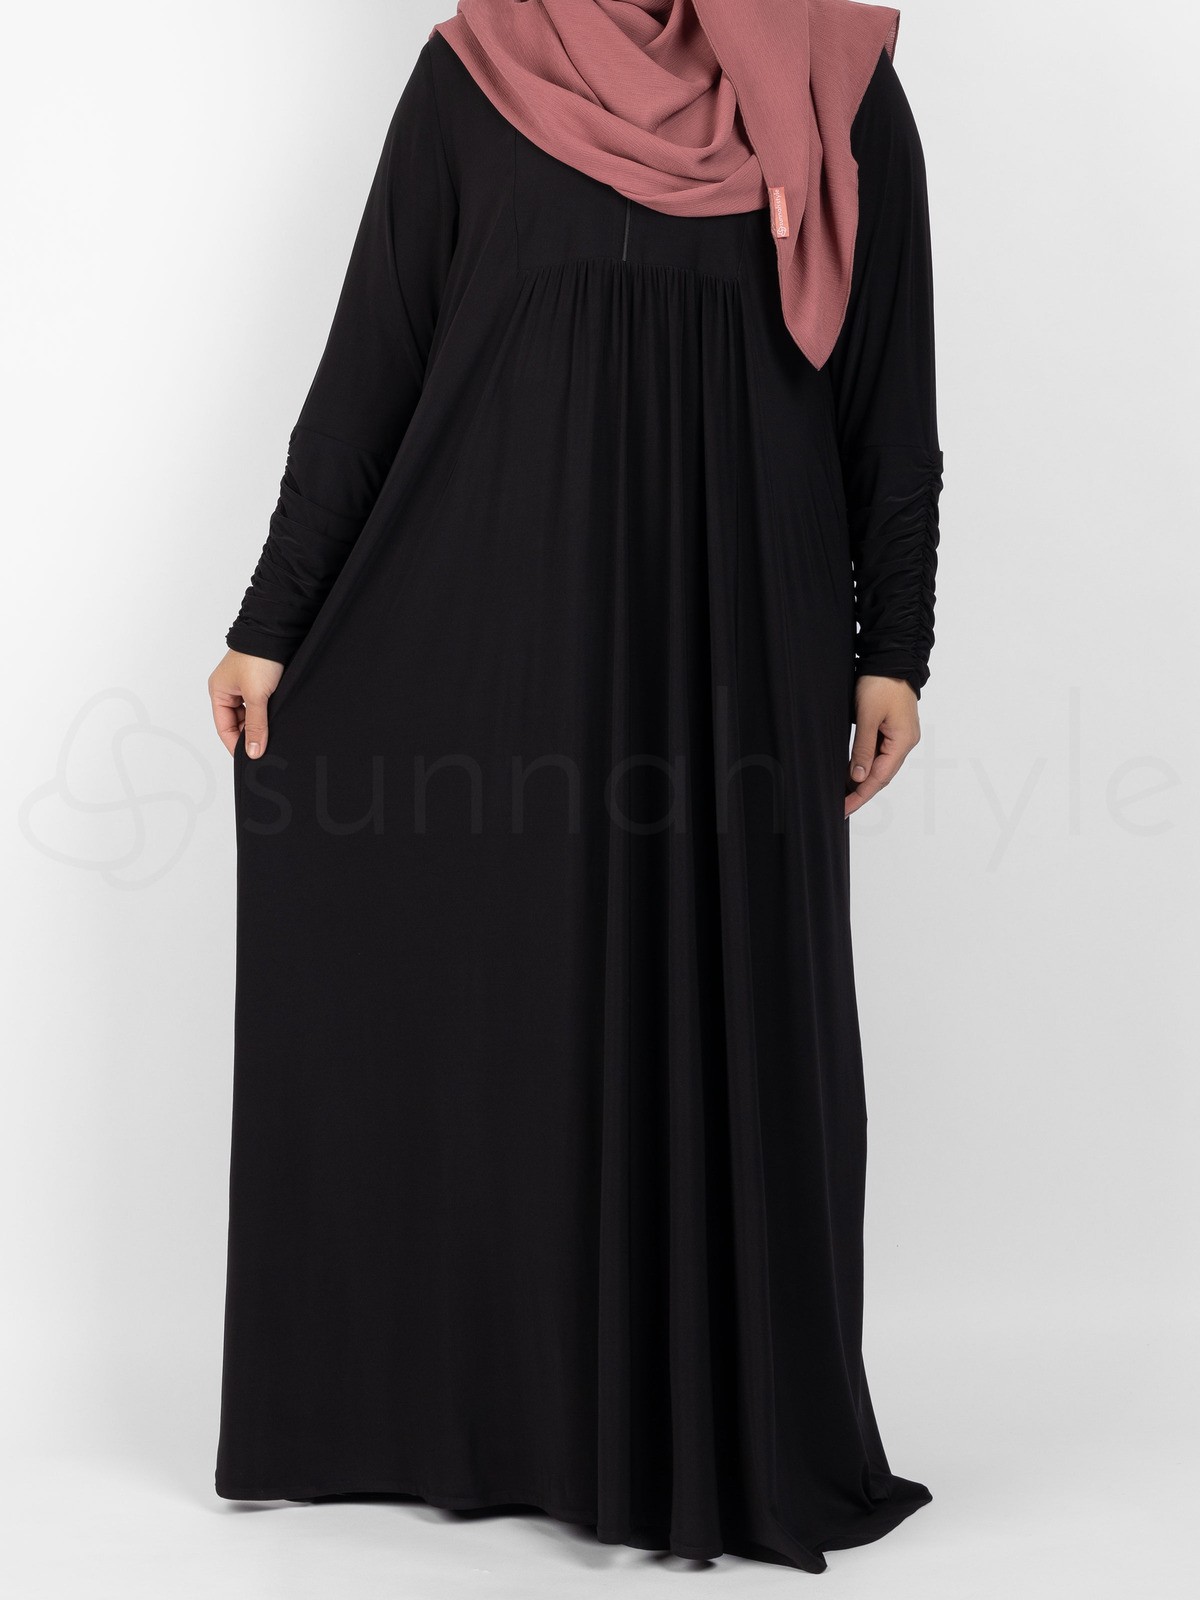 Sunnah Style - Flourish Jersey Abaya (Black)